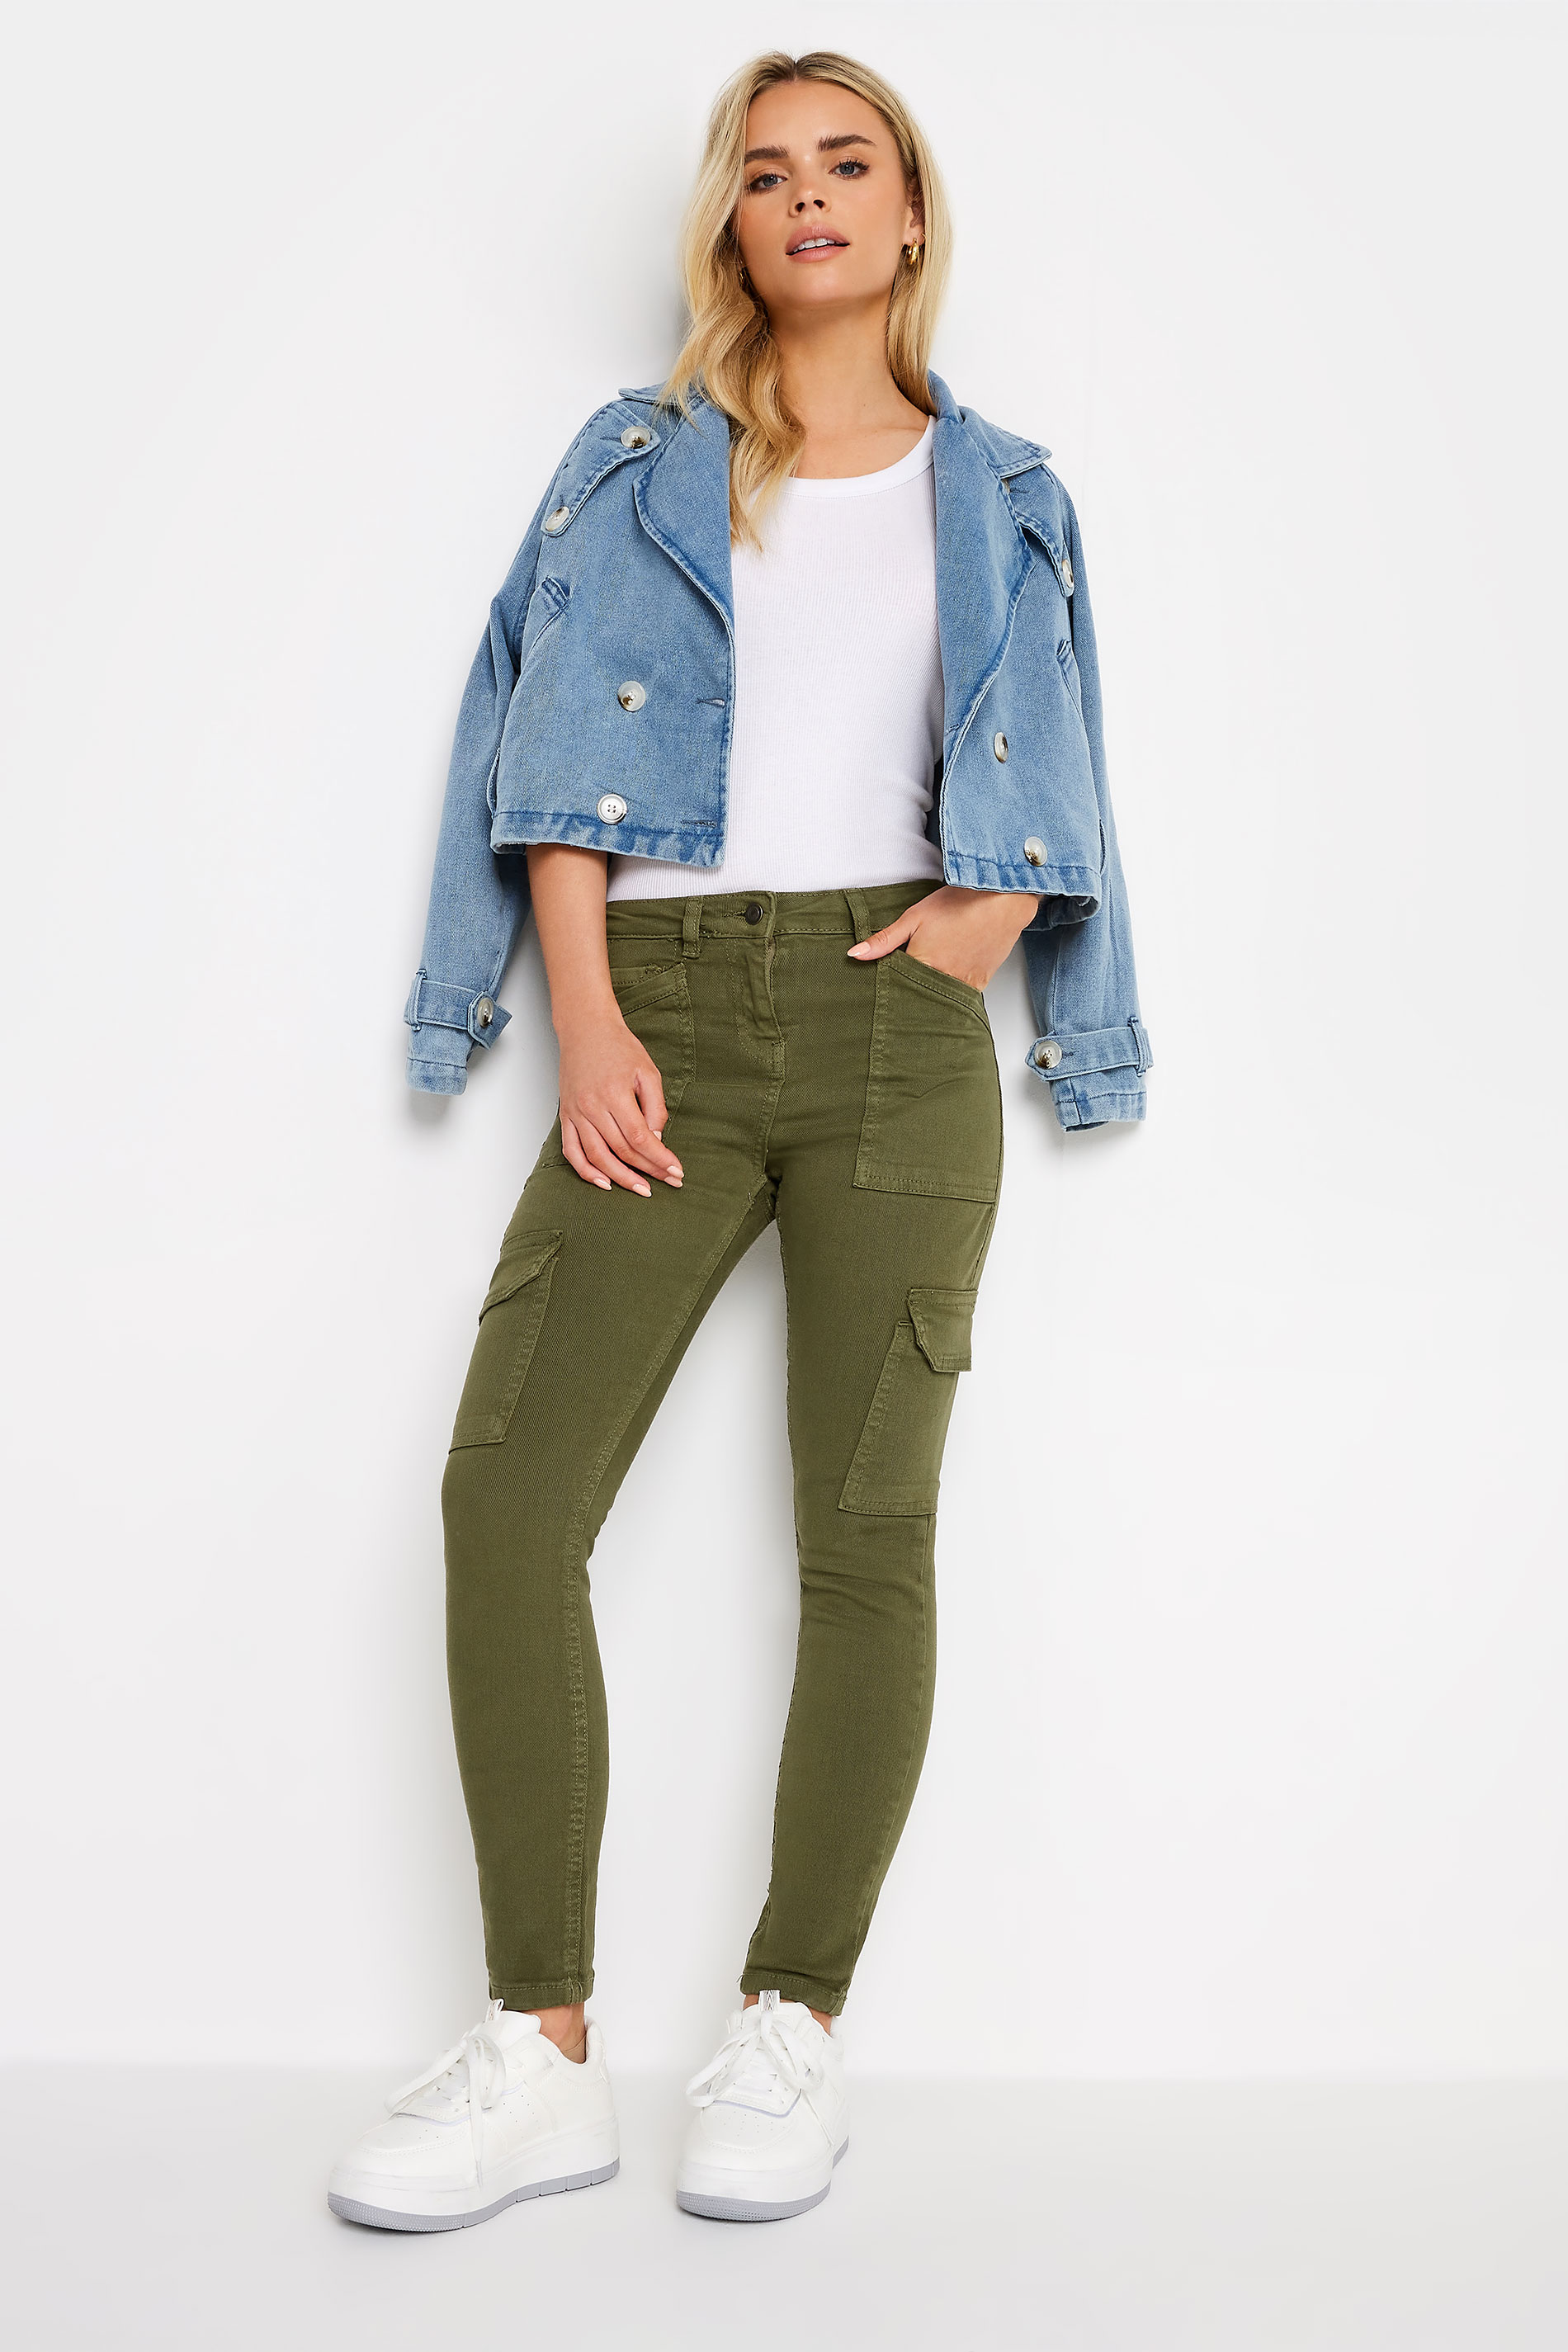 PixieGirl Petite Womens Khaki Green Pocket Detail Cargo Skinny Jeans | PixieGirl 3